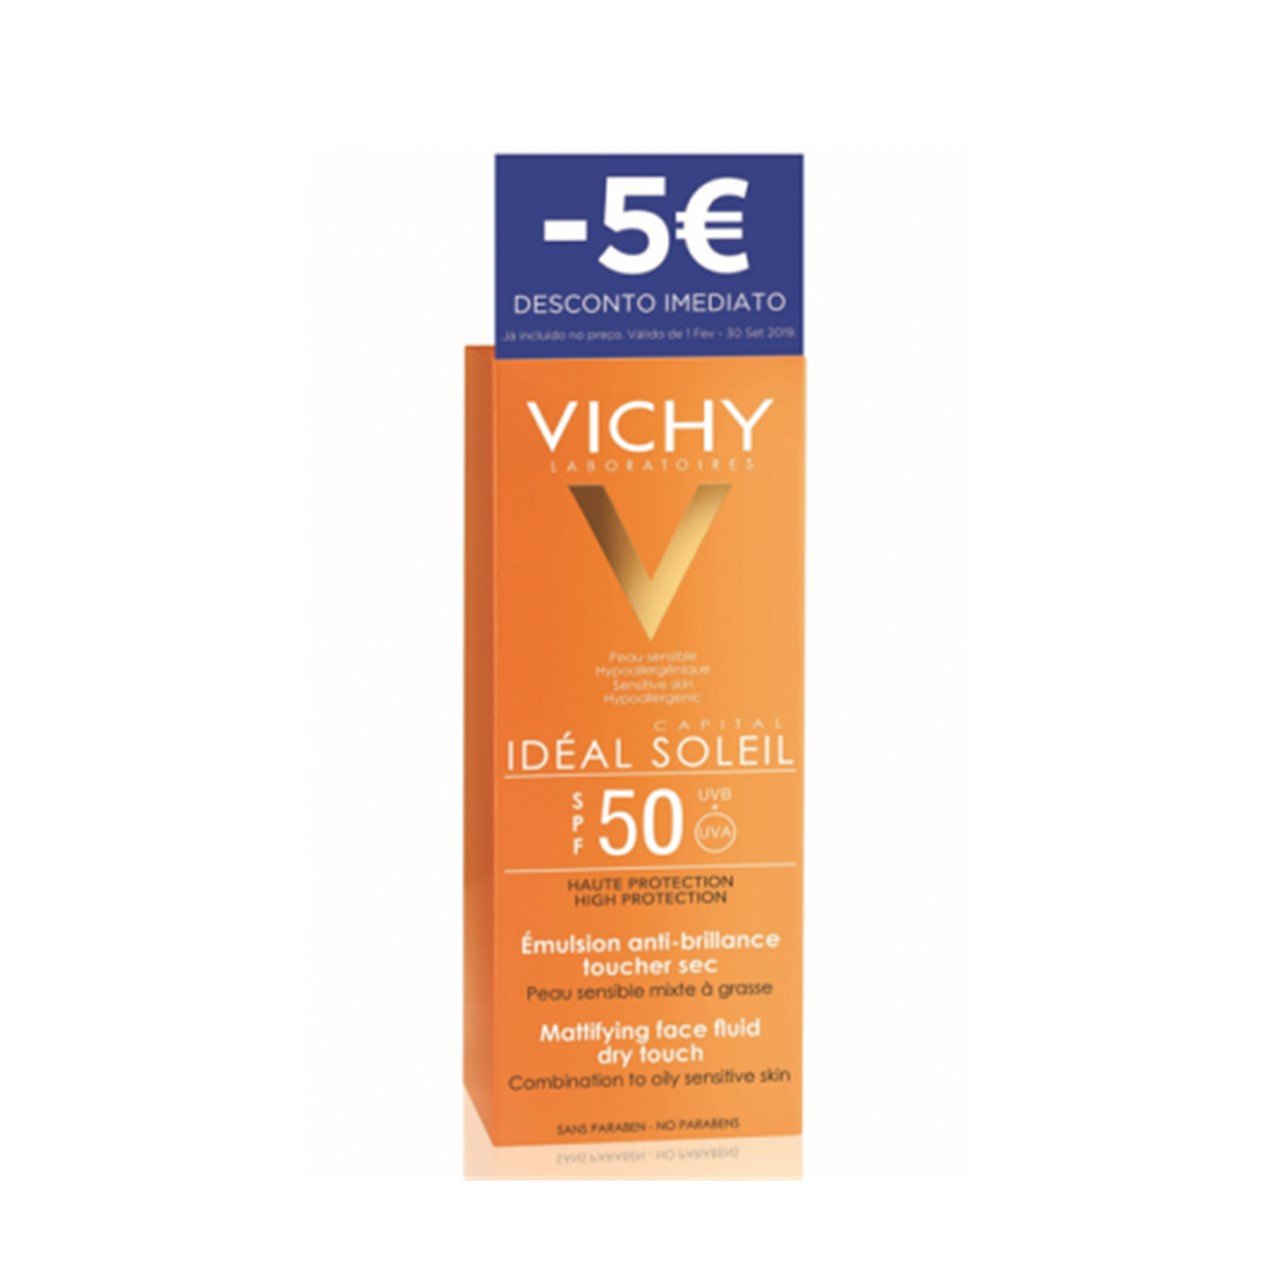 Vichy spf 50 для лица флюид. Флюид виши СПФ 50. Крем флюид 50 SPF виши. Vichy солнцезащитный флюид 30. Vichy ideal Soleil 50.